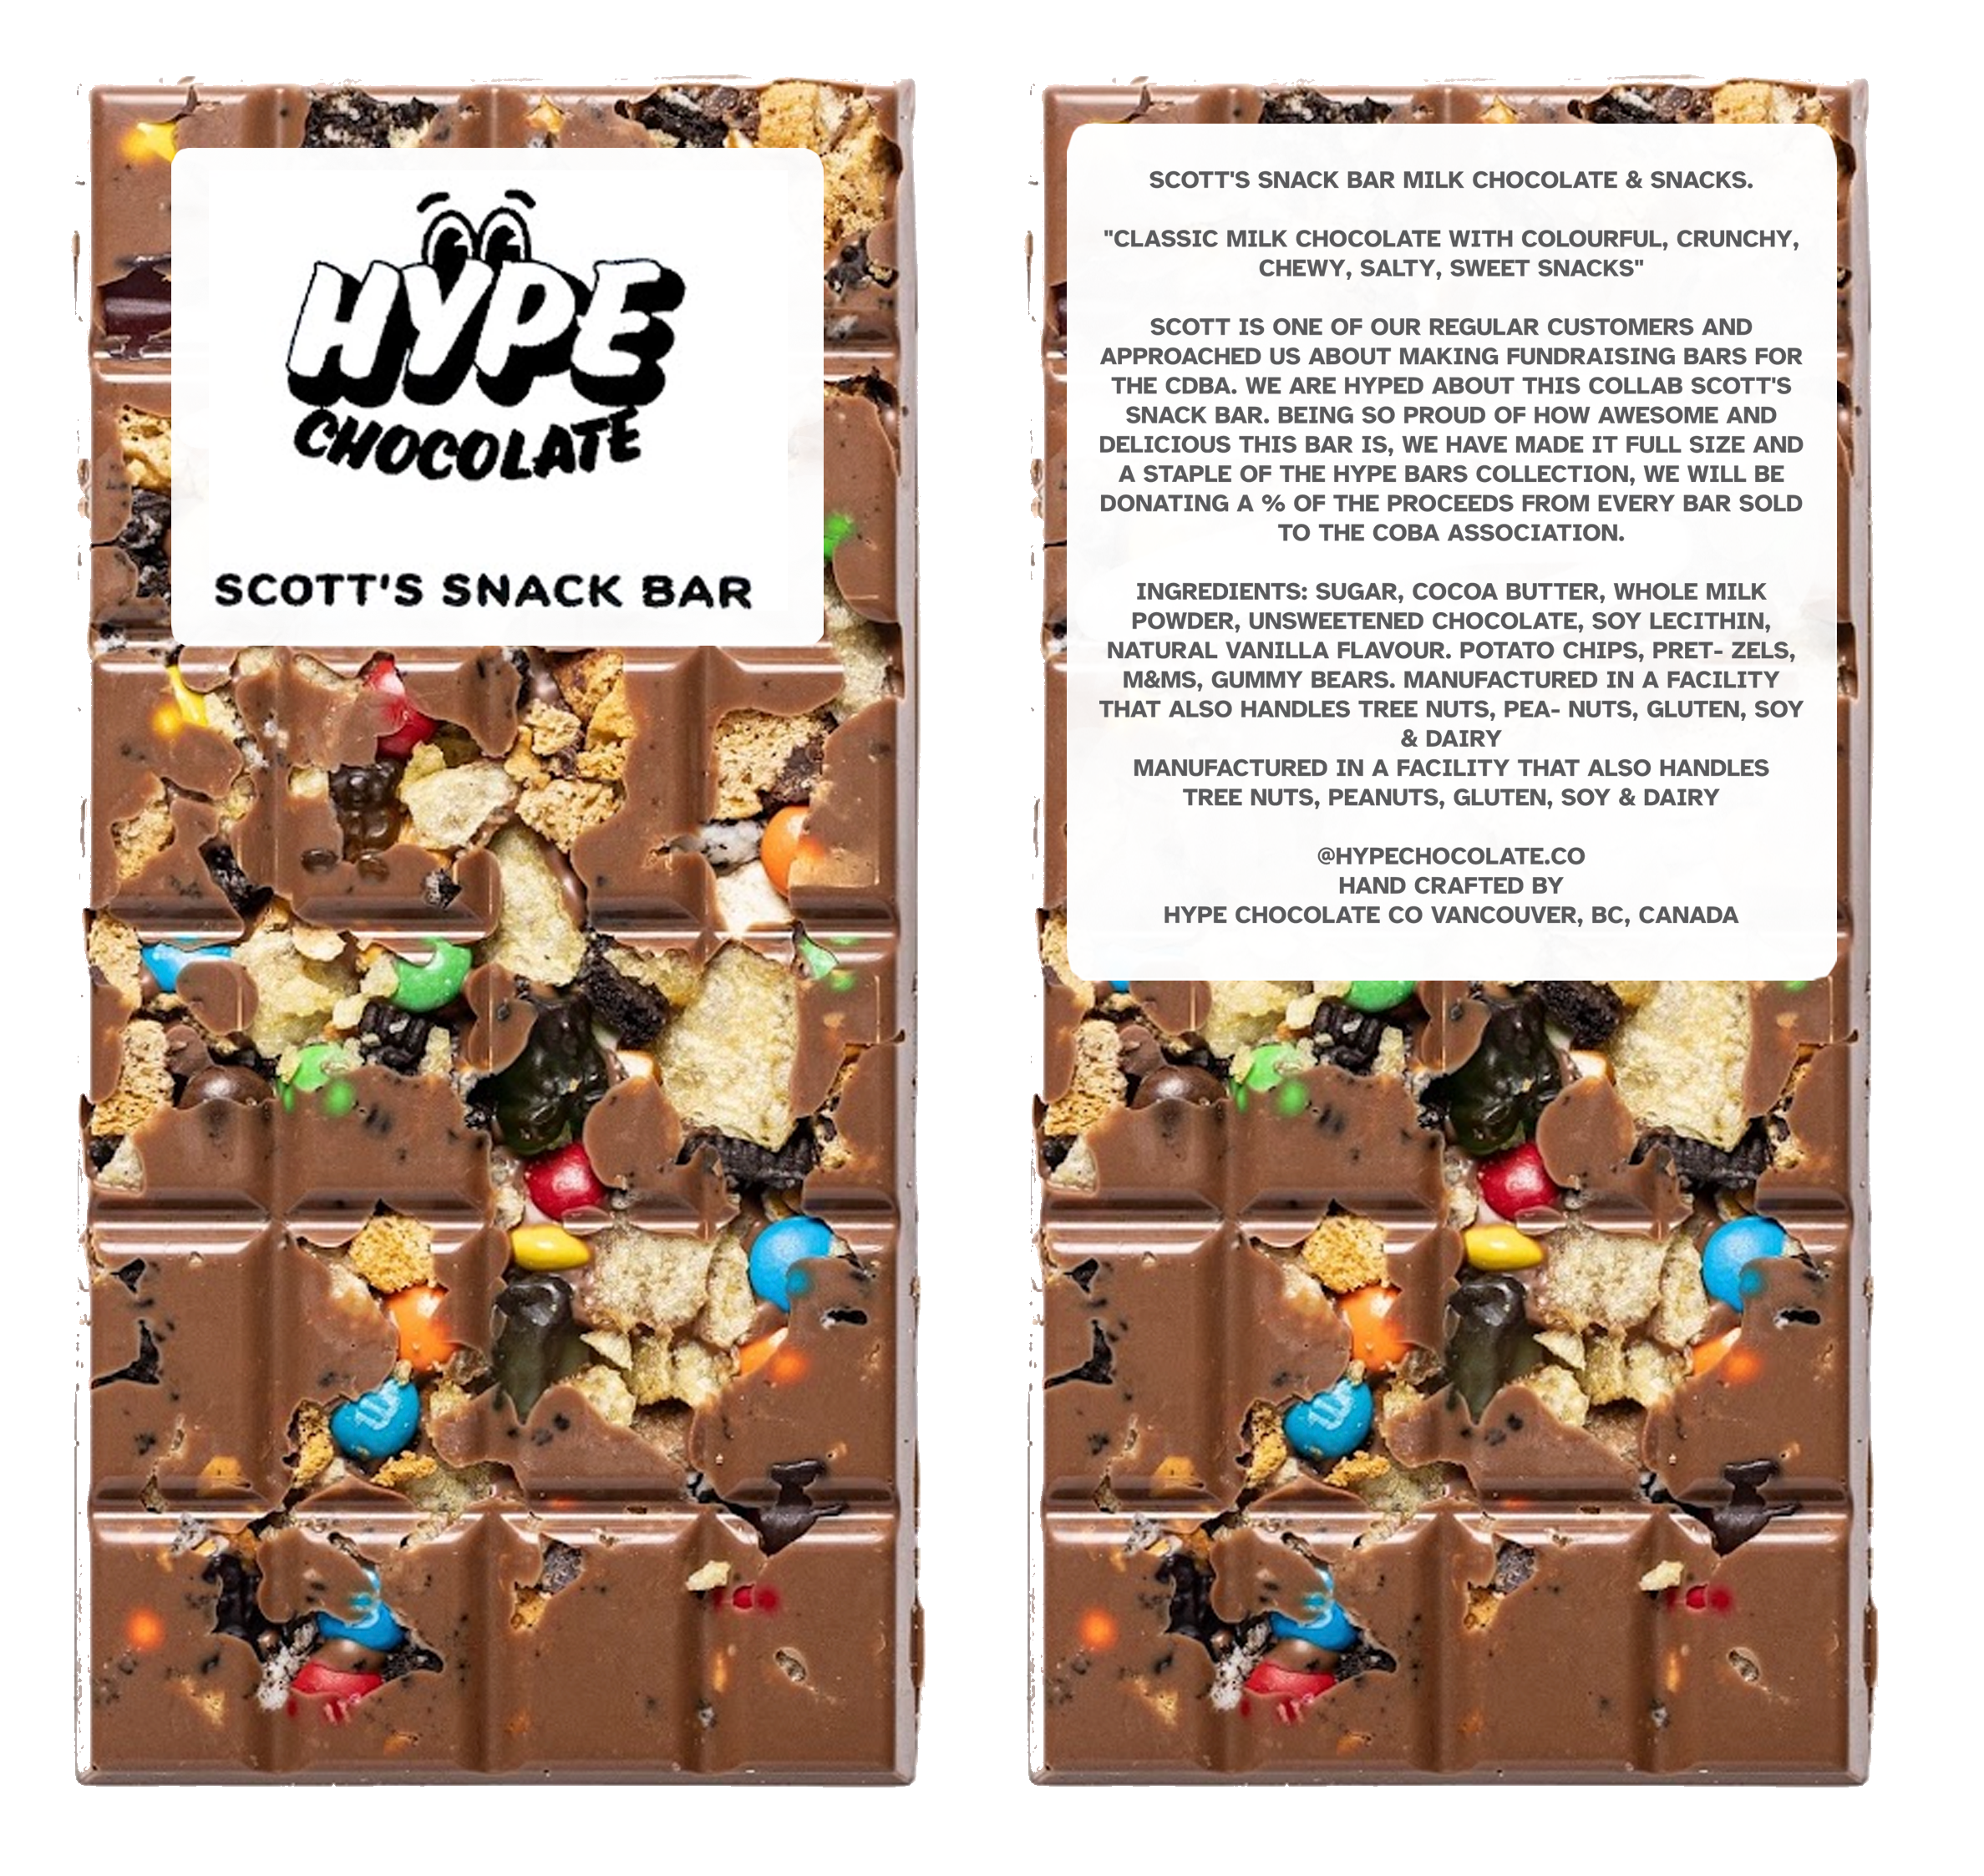 Scott's Snack Bar at Hype Chocolate